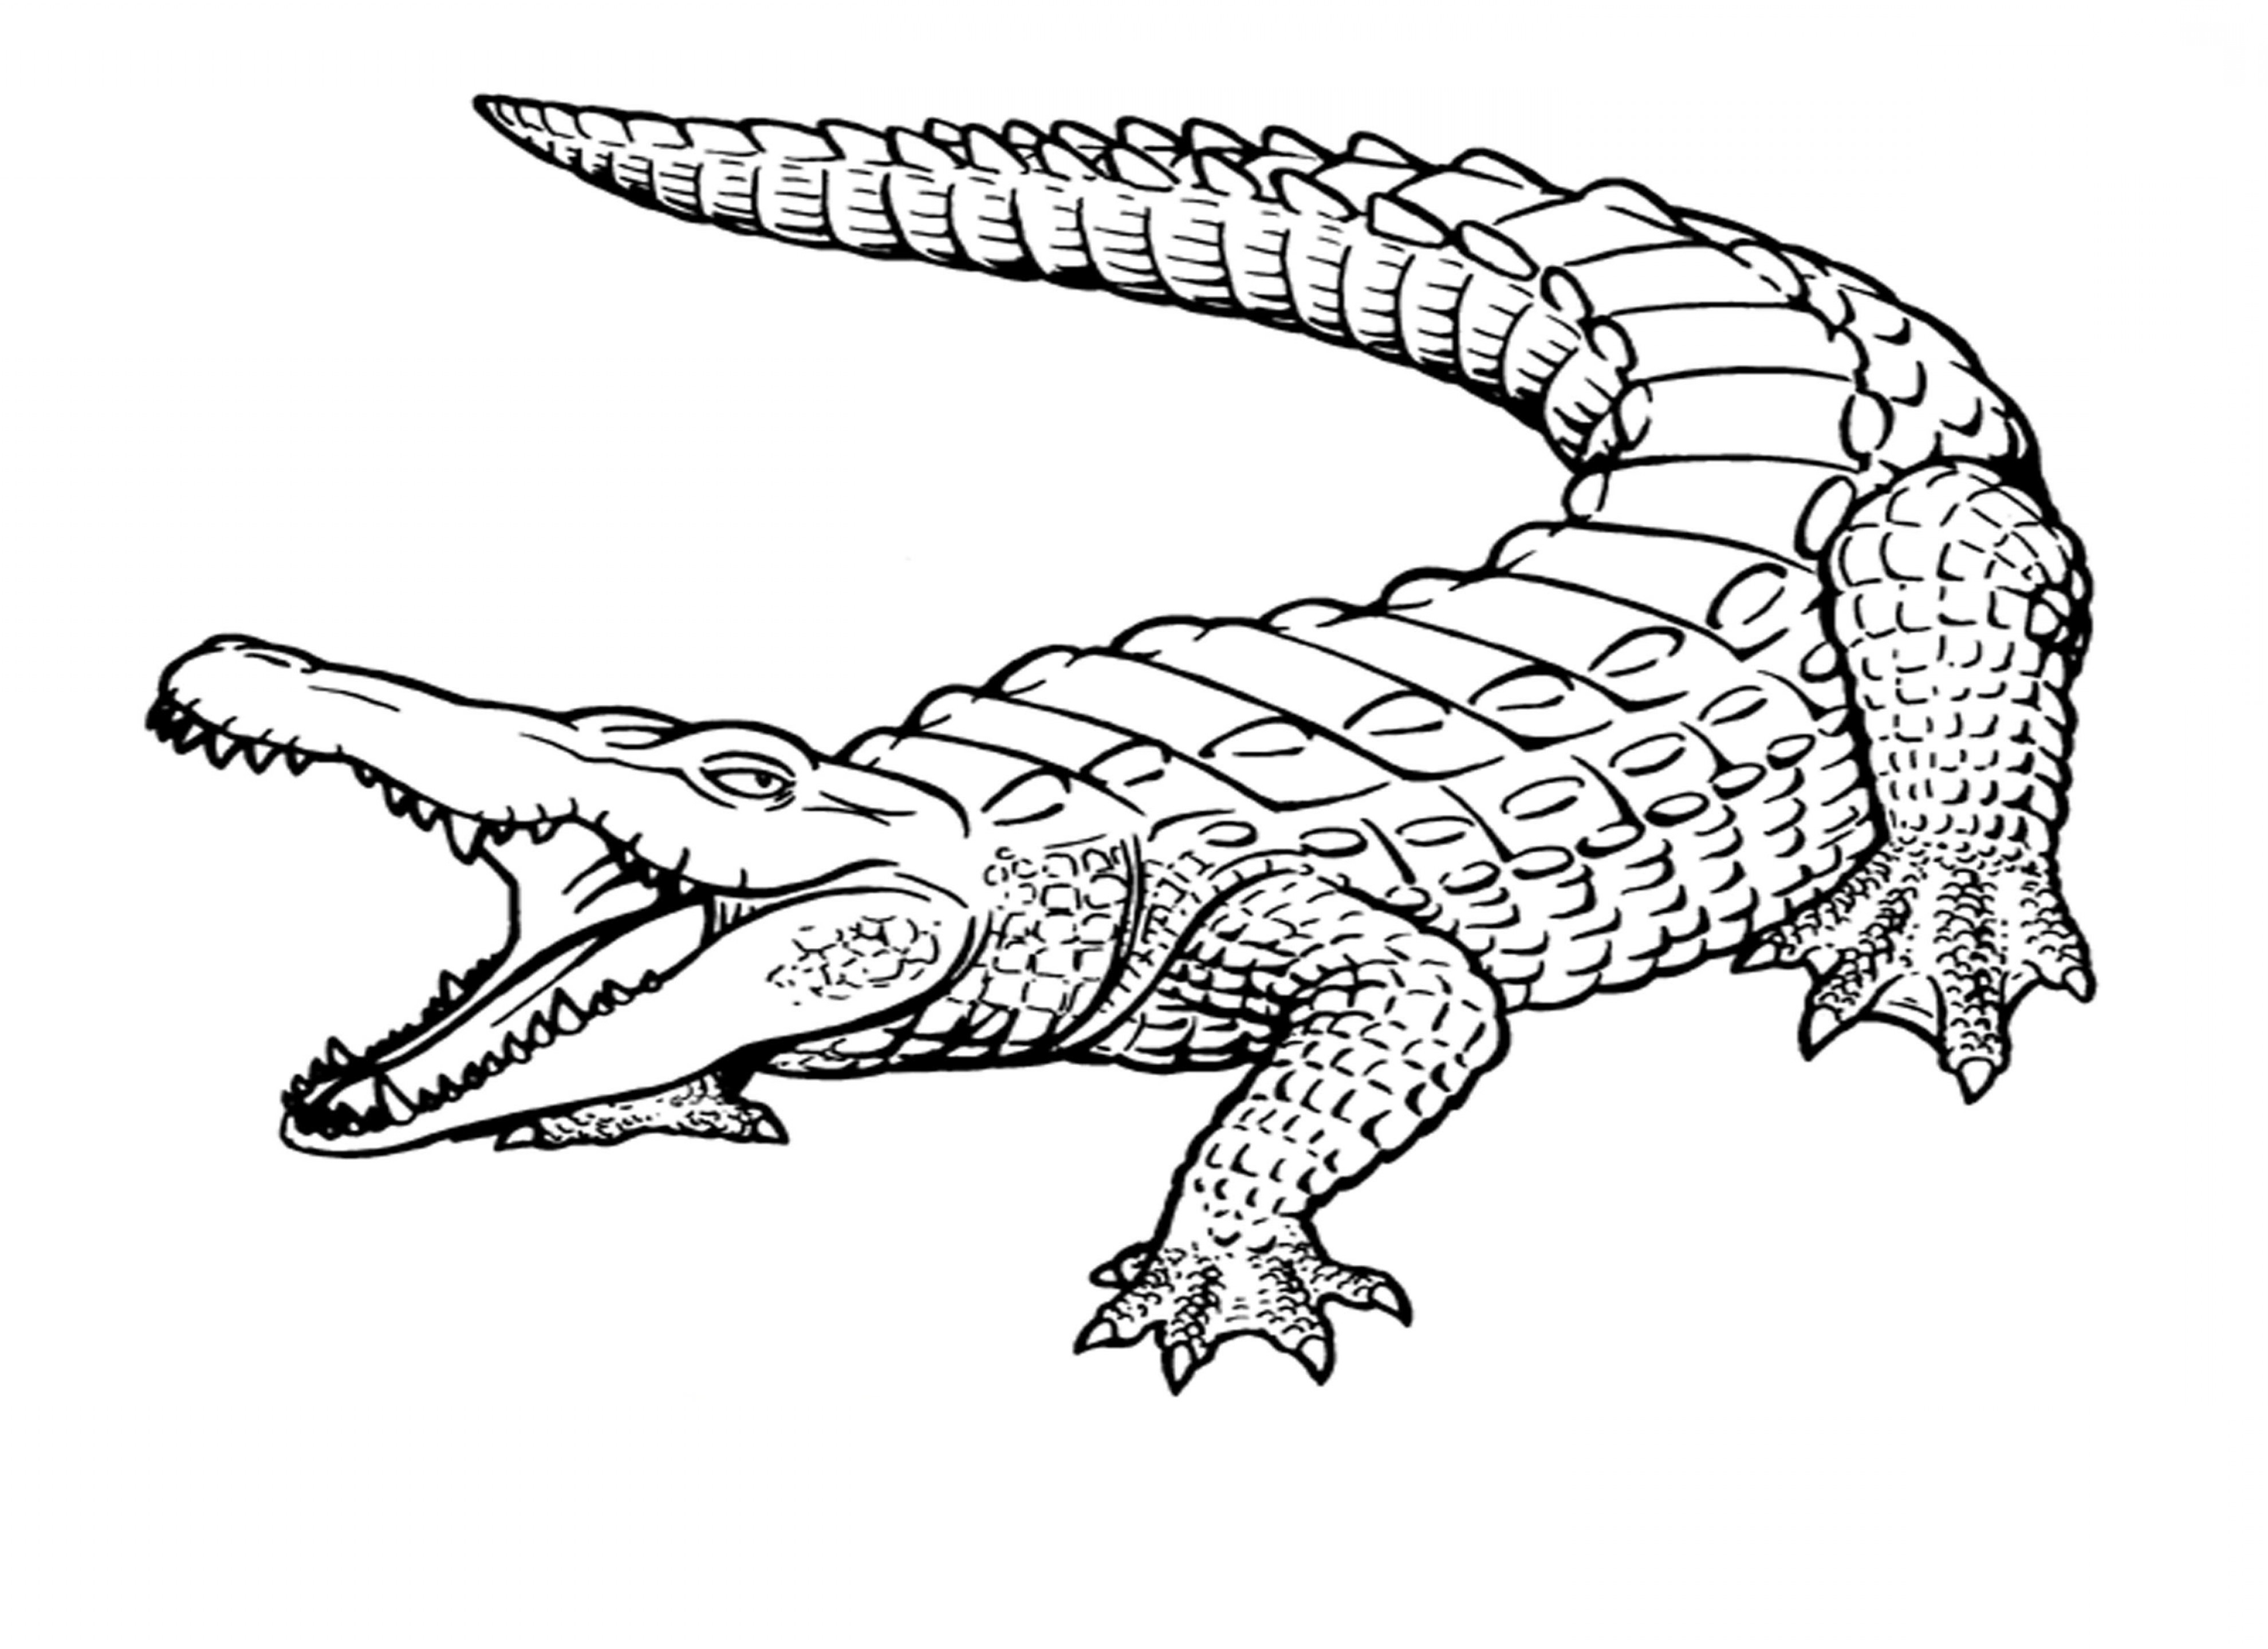 Crocodile Art